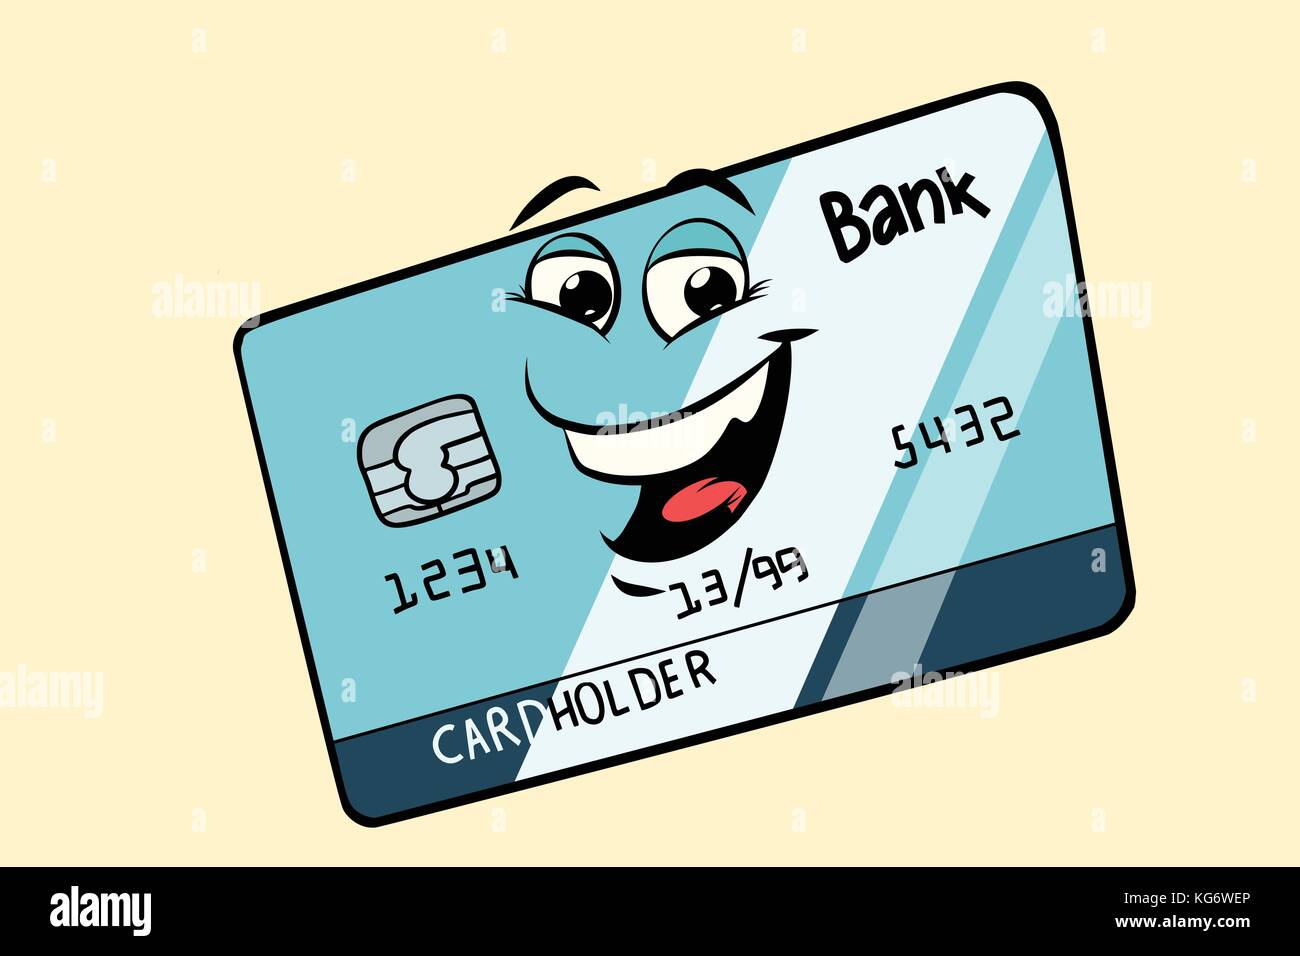 Bank card cute smiley face character. Comic book cartoon pop art illustration retro vector Stock Vector